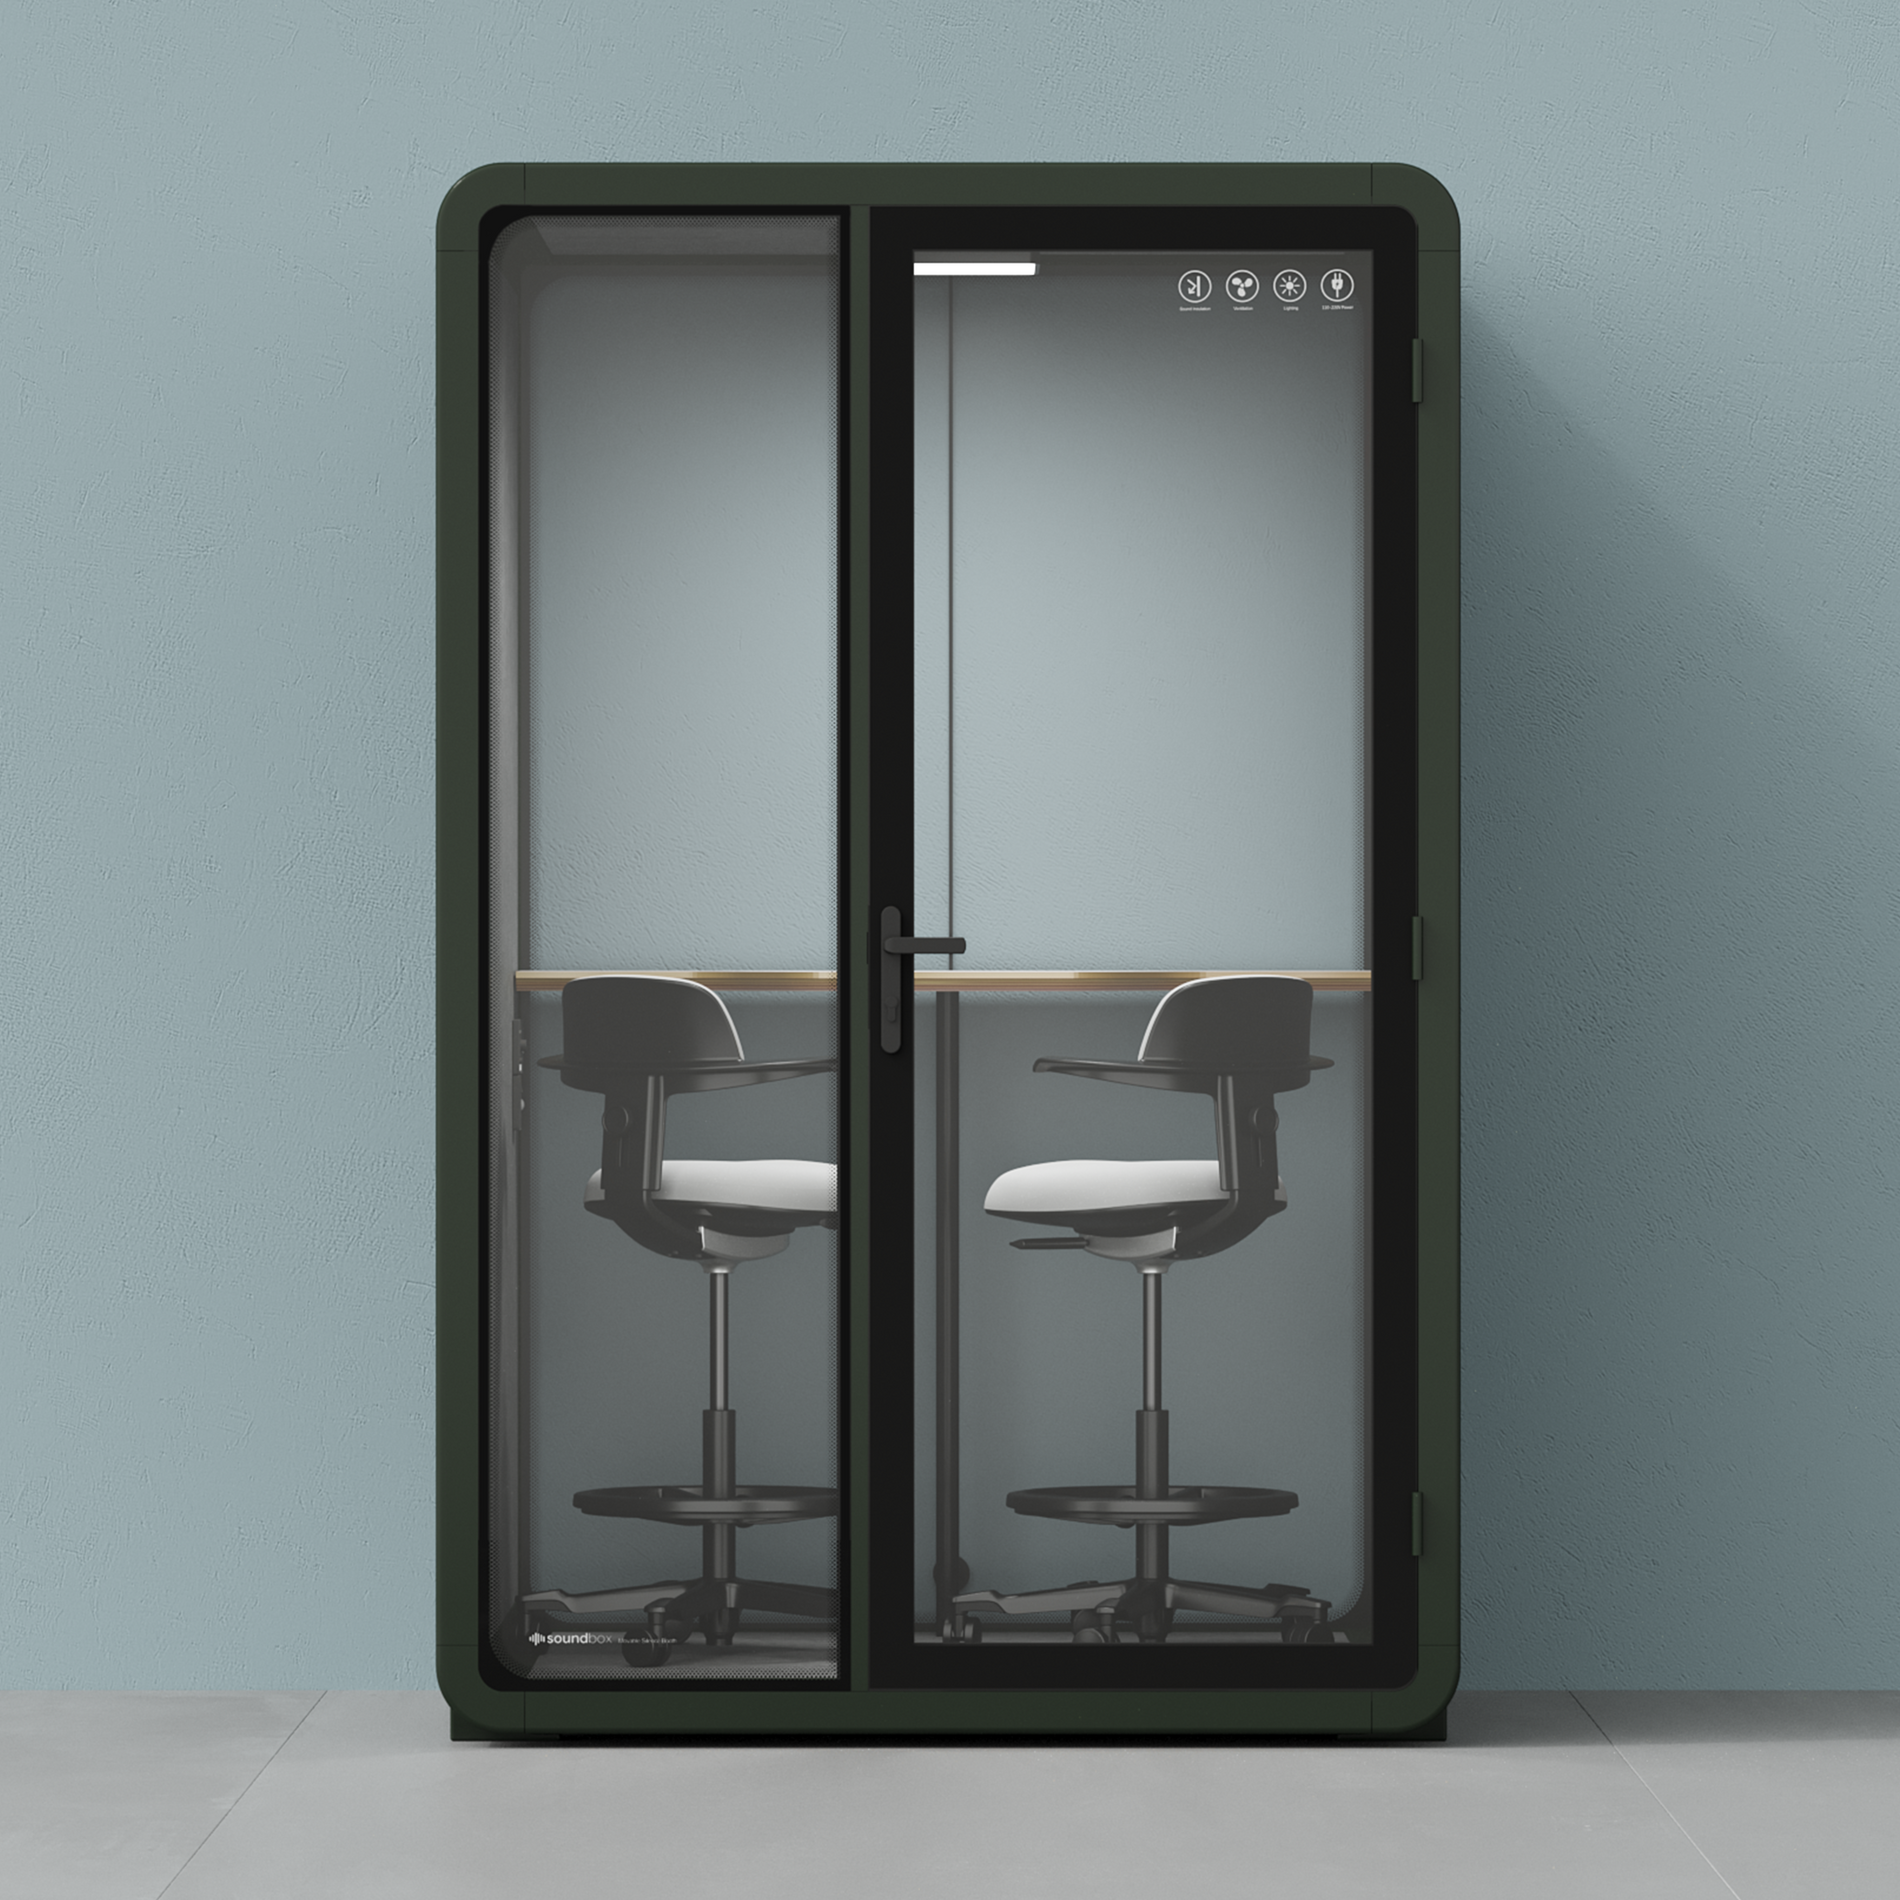 Quell - kollega - 2 person podDark Green / Dark Gray / Dual Zoom Room + Device Shelf + 2 Barstools